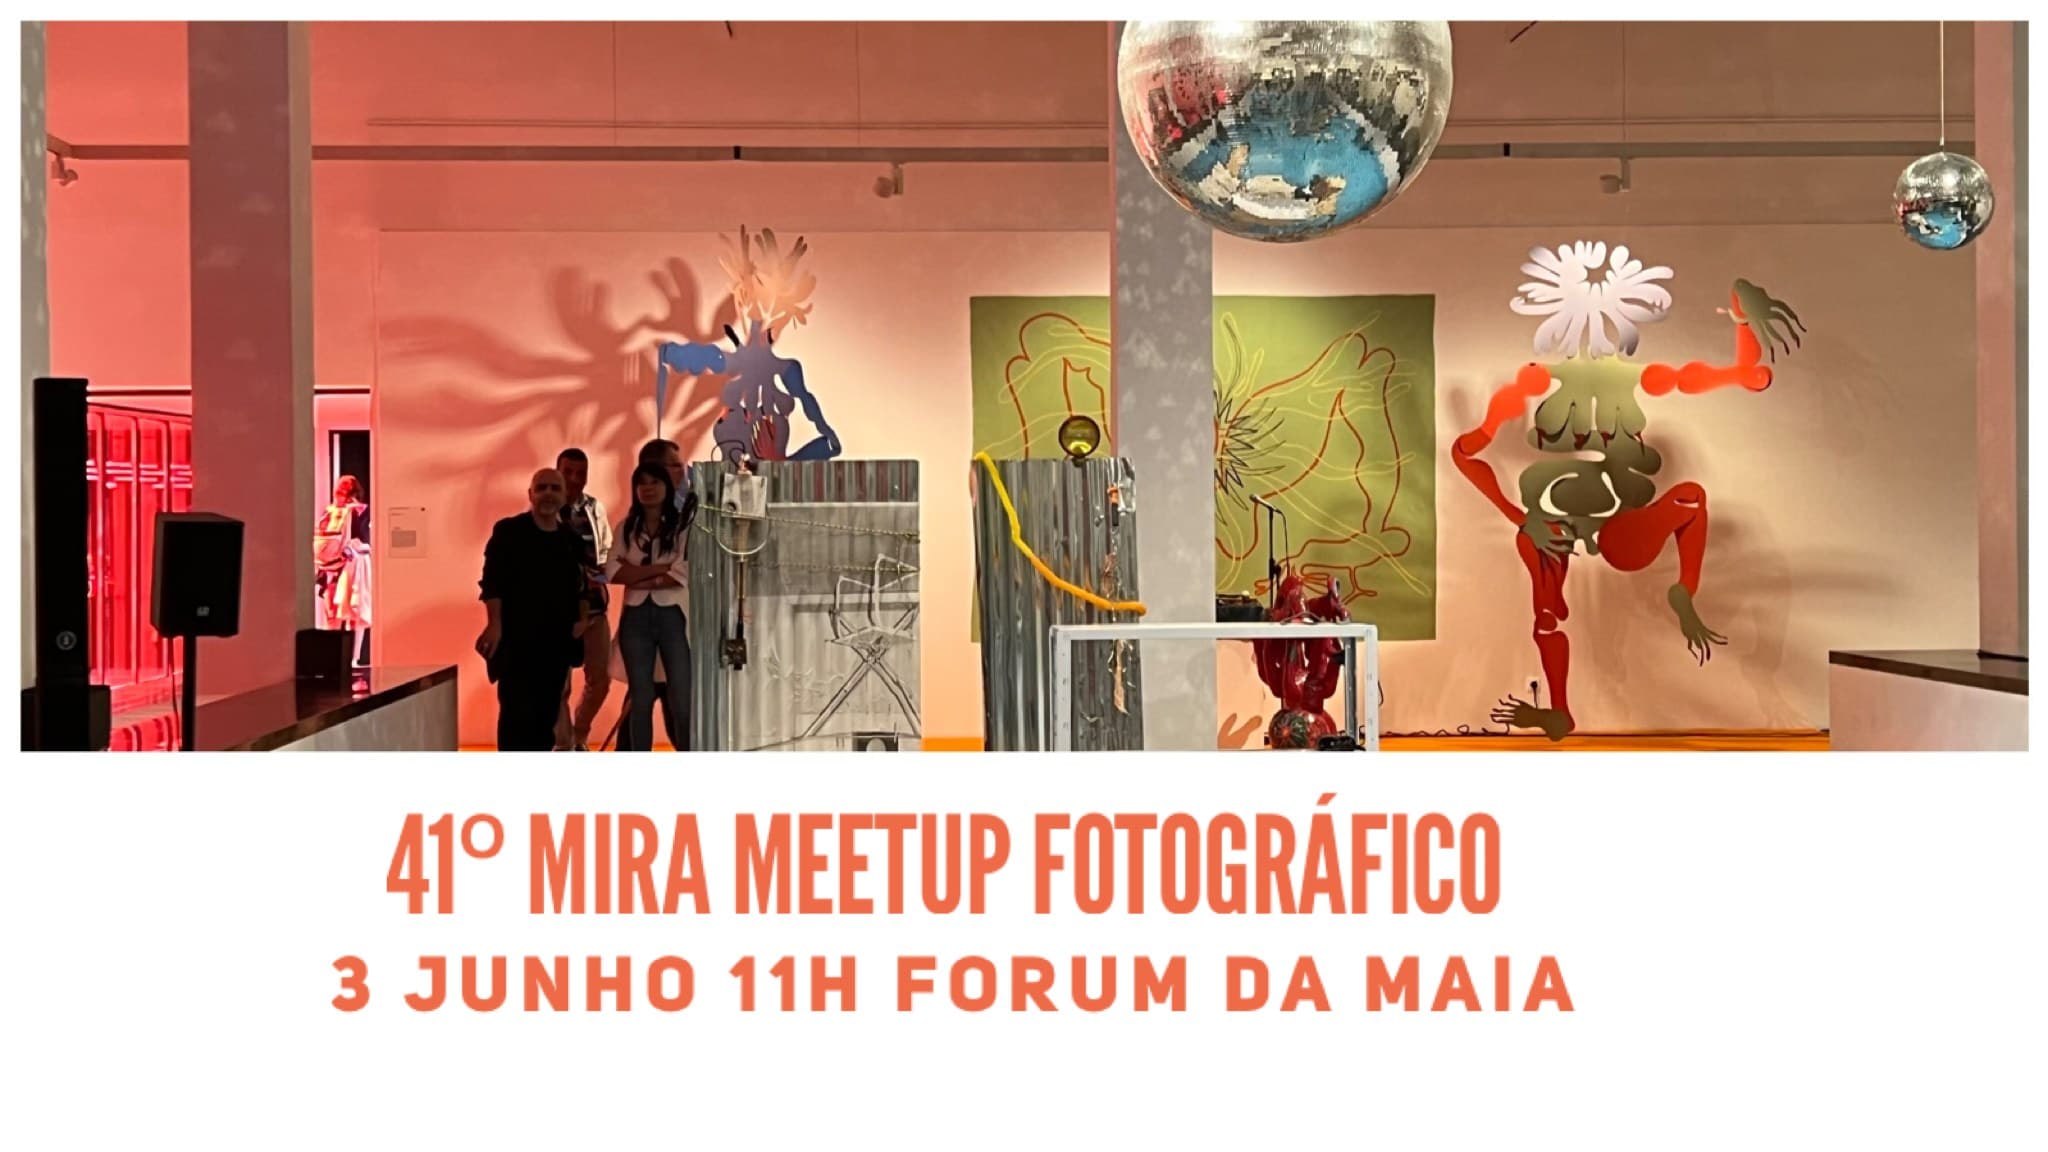 41º MIRA meetup fotográfico à Bienal da Maia